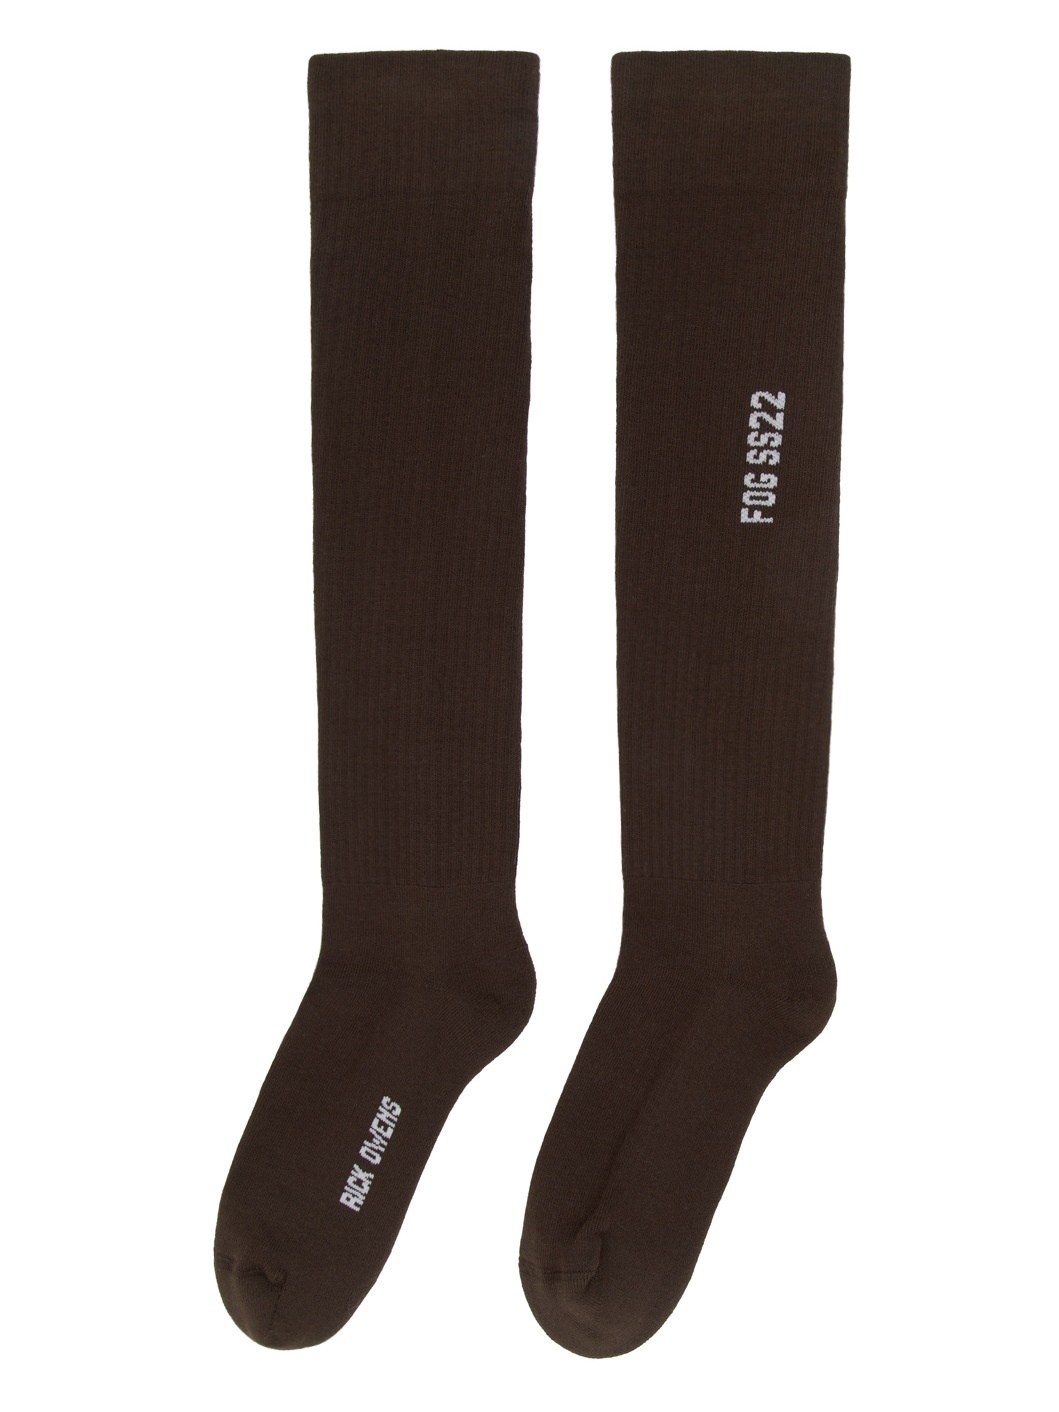 Brown Cotton Knee-High Socks - 2